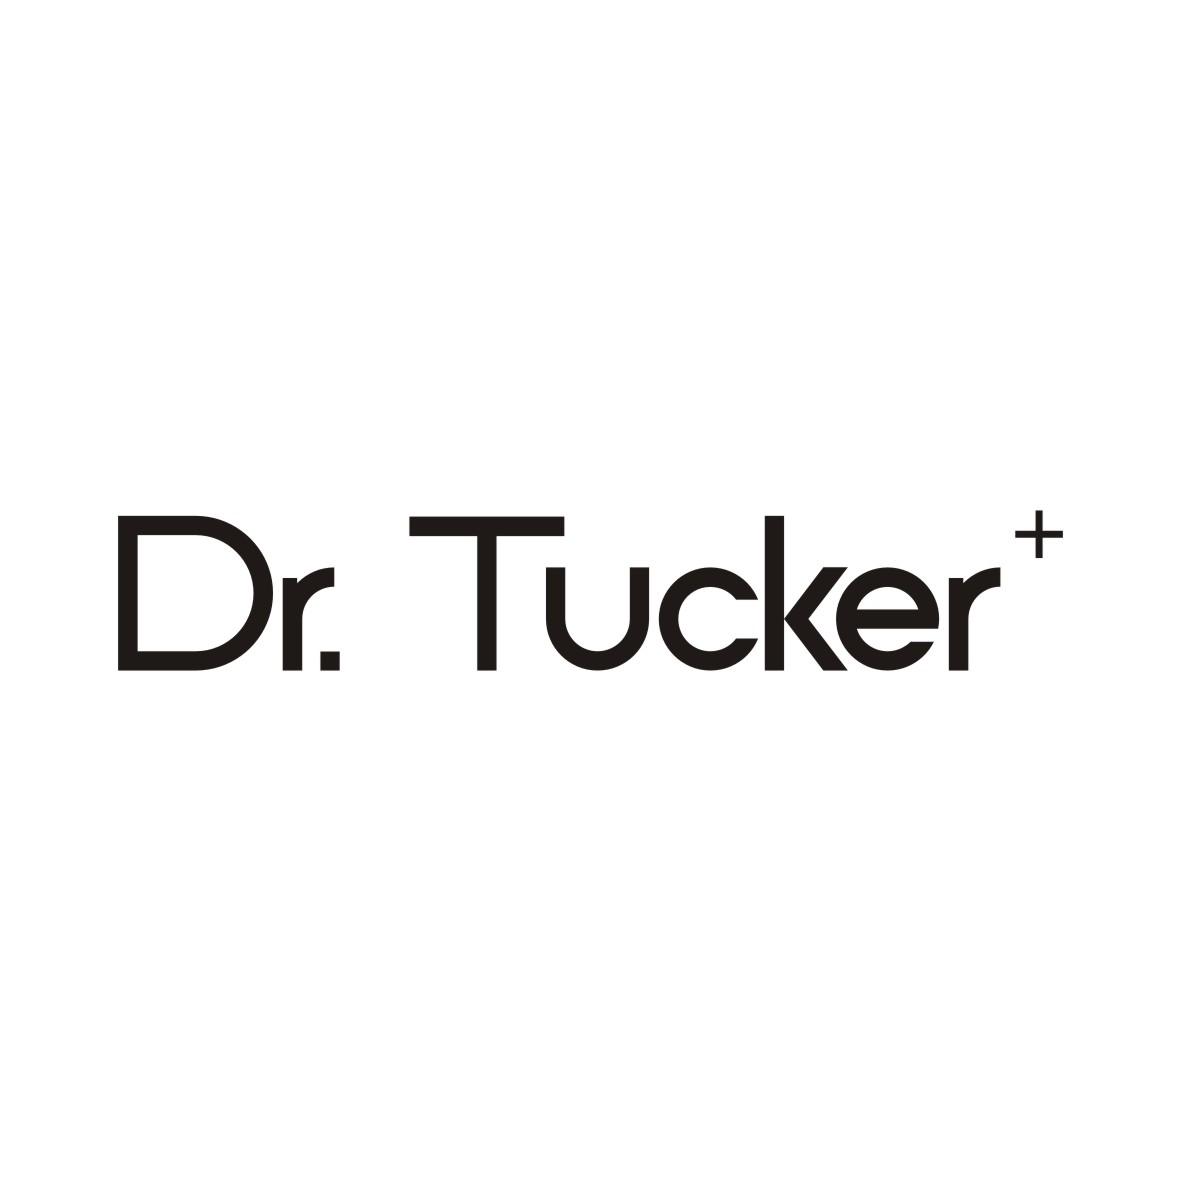 10类-医疗器械DR.TUCKER+商标转让